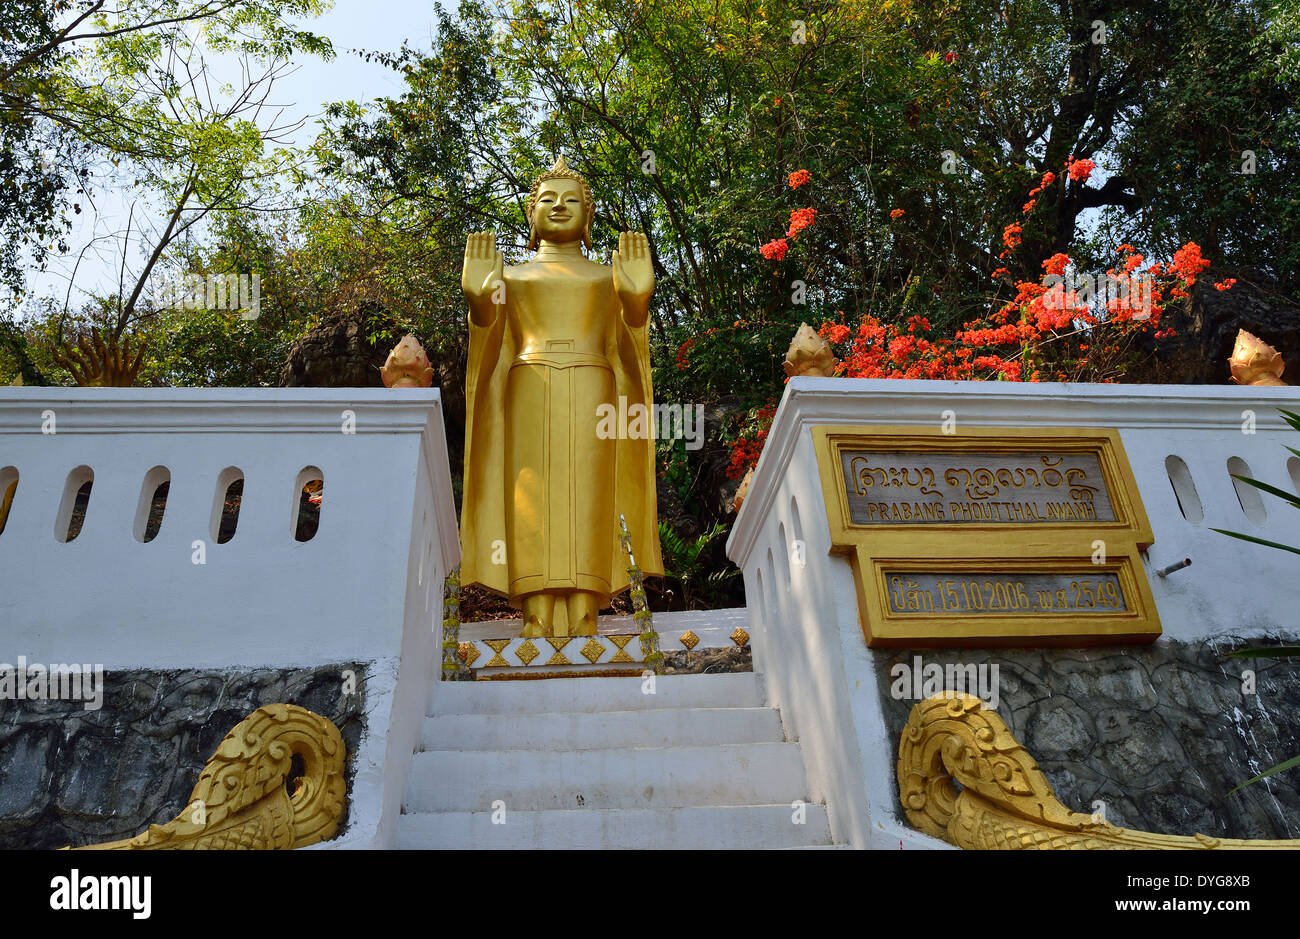 Buddhist gold statues at Mount Phousi,  Luang Prabang, Laos, Stock Photo